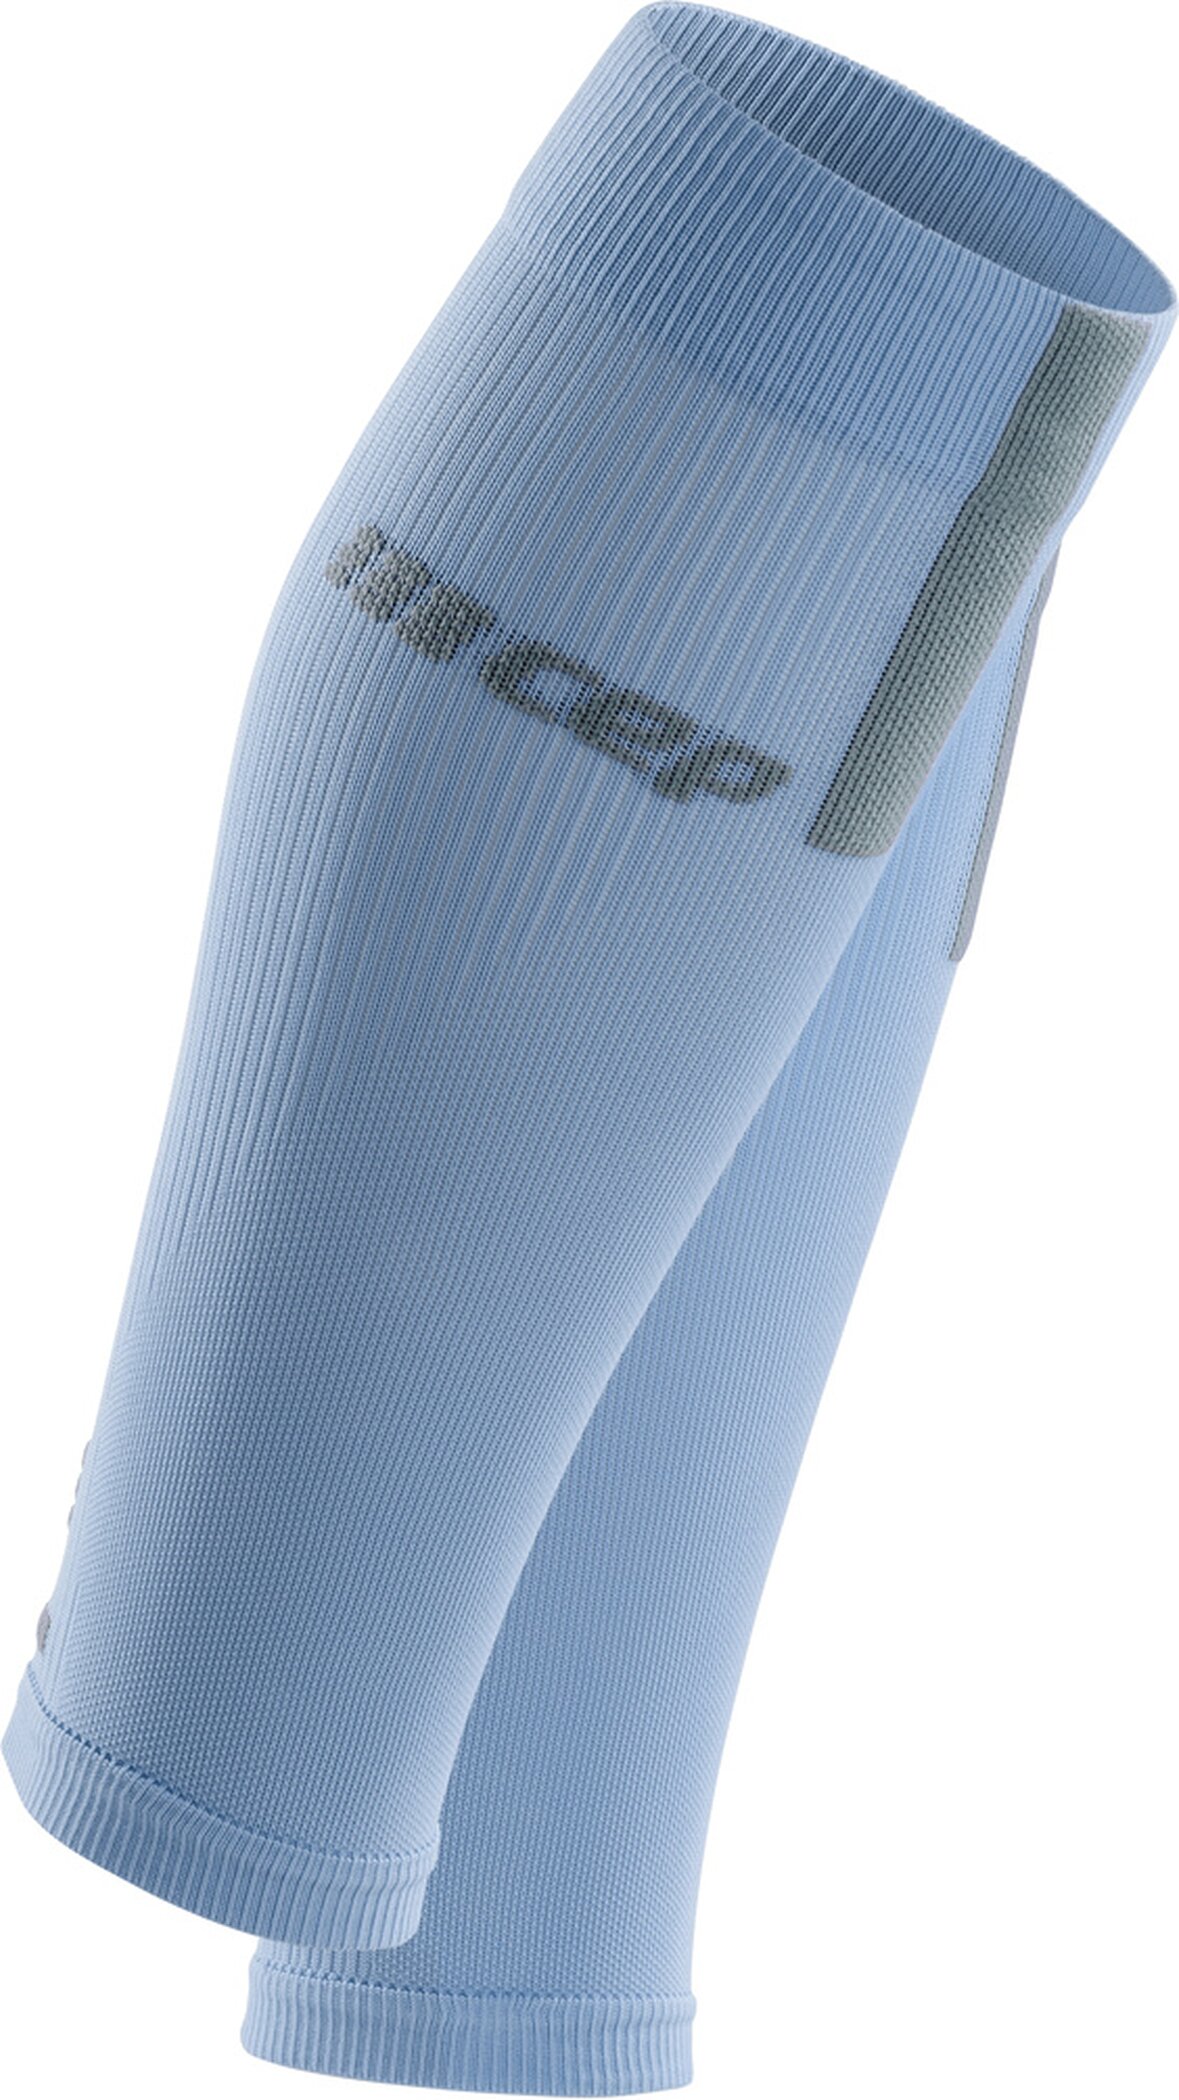 CEP calf sleeves 3.0, women